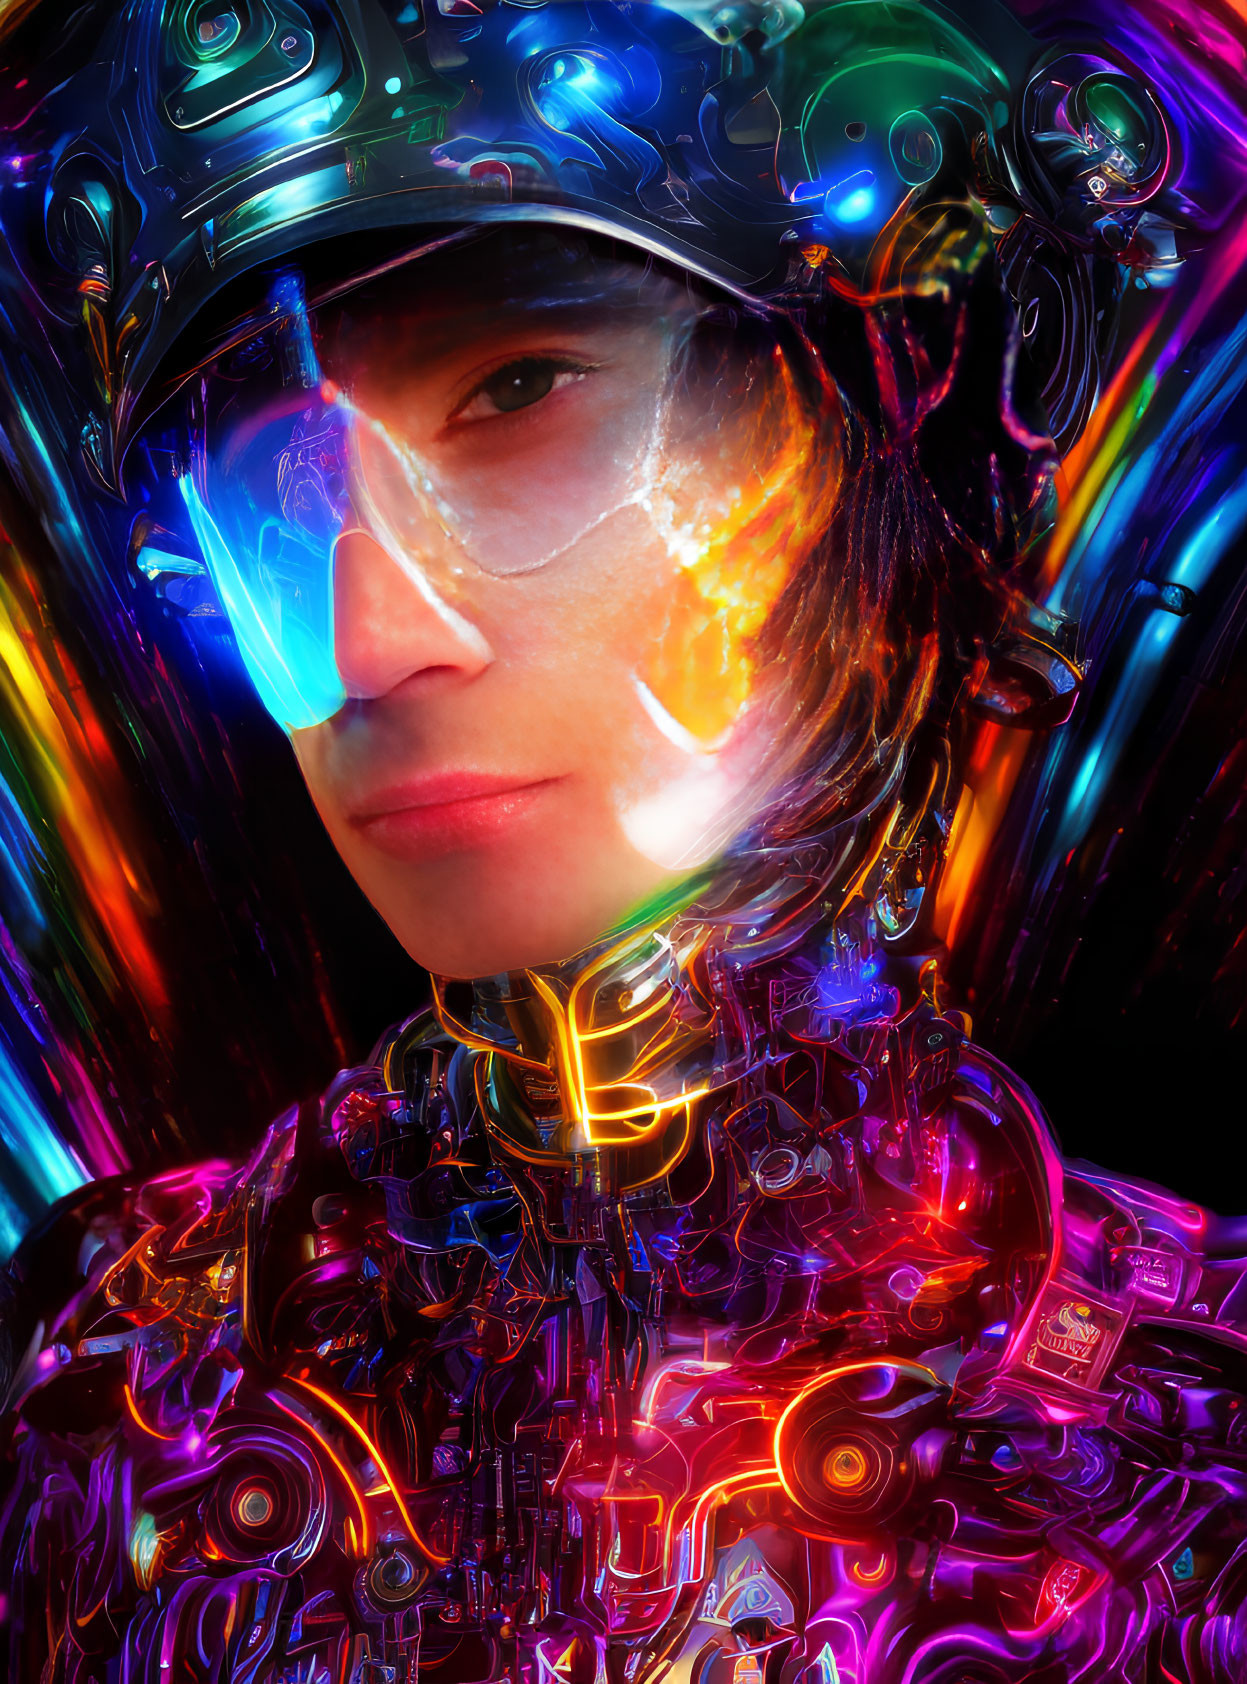 Futuristic portrait with transparent helmet and neon colors